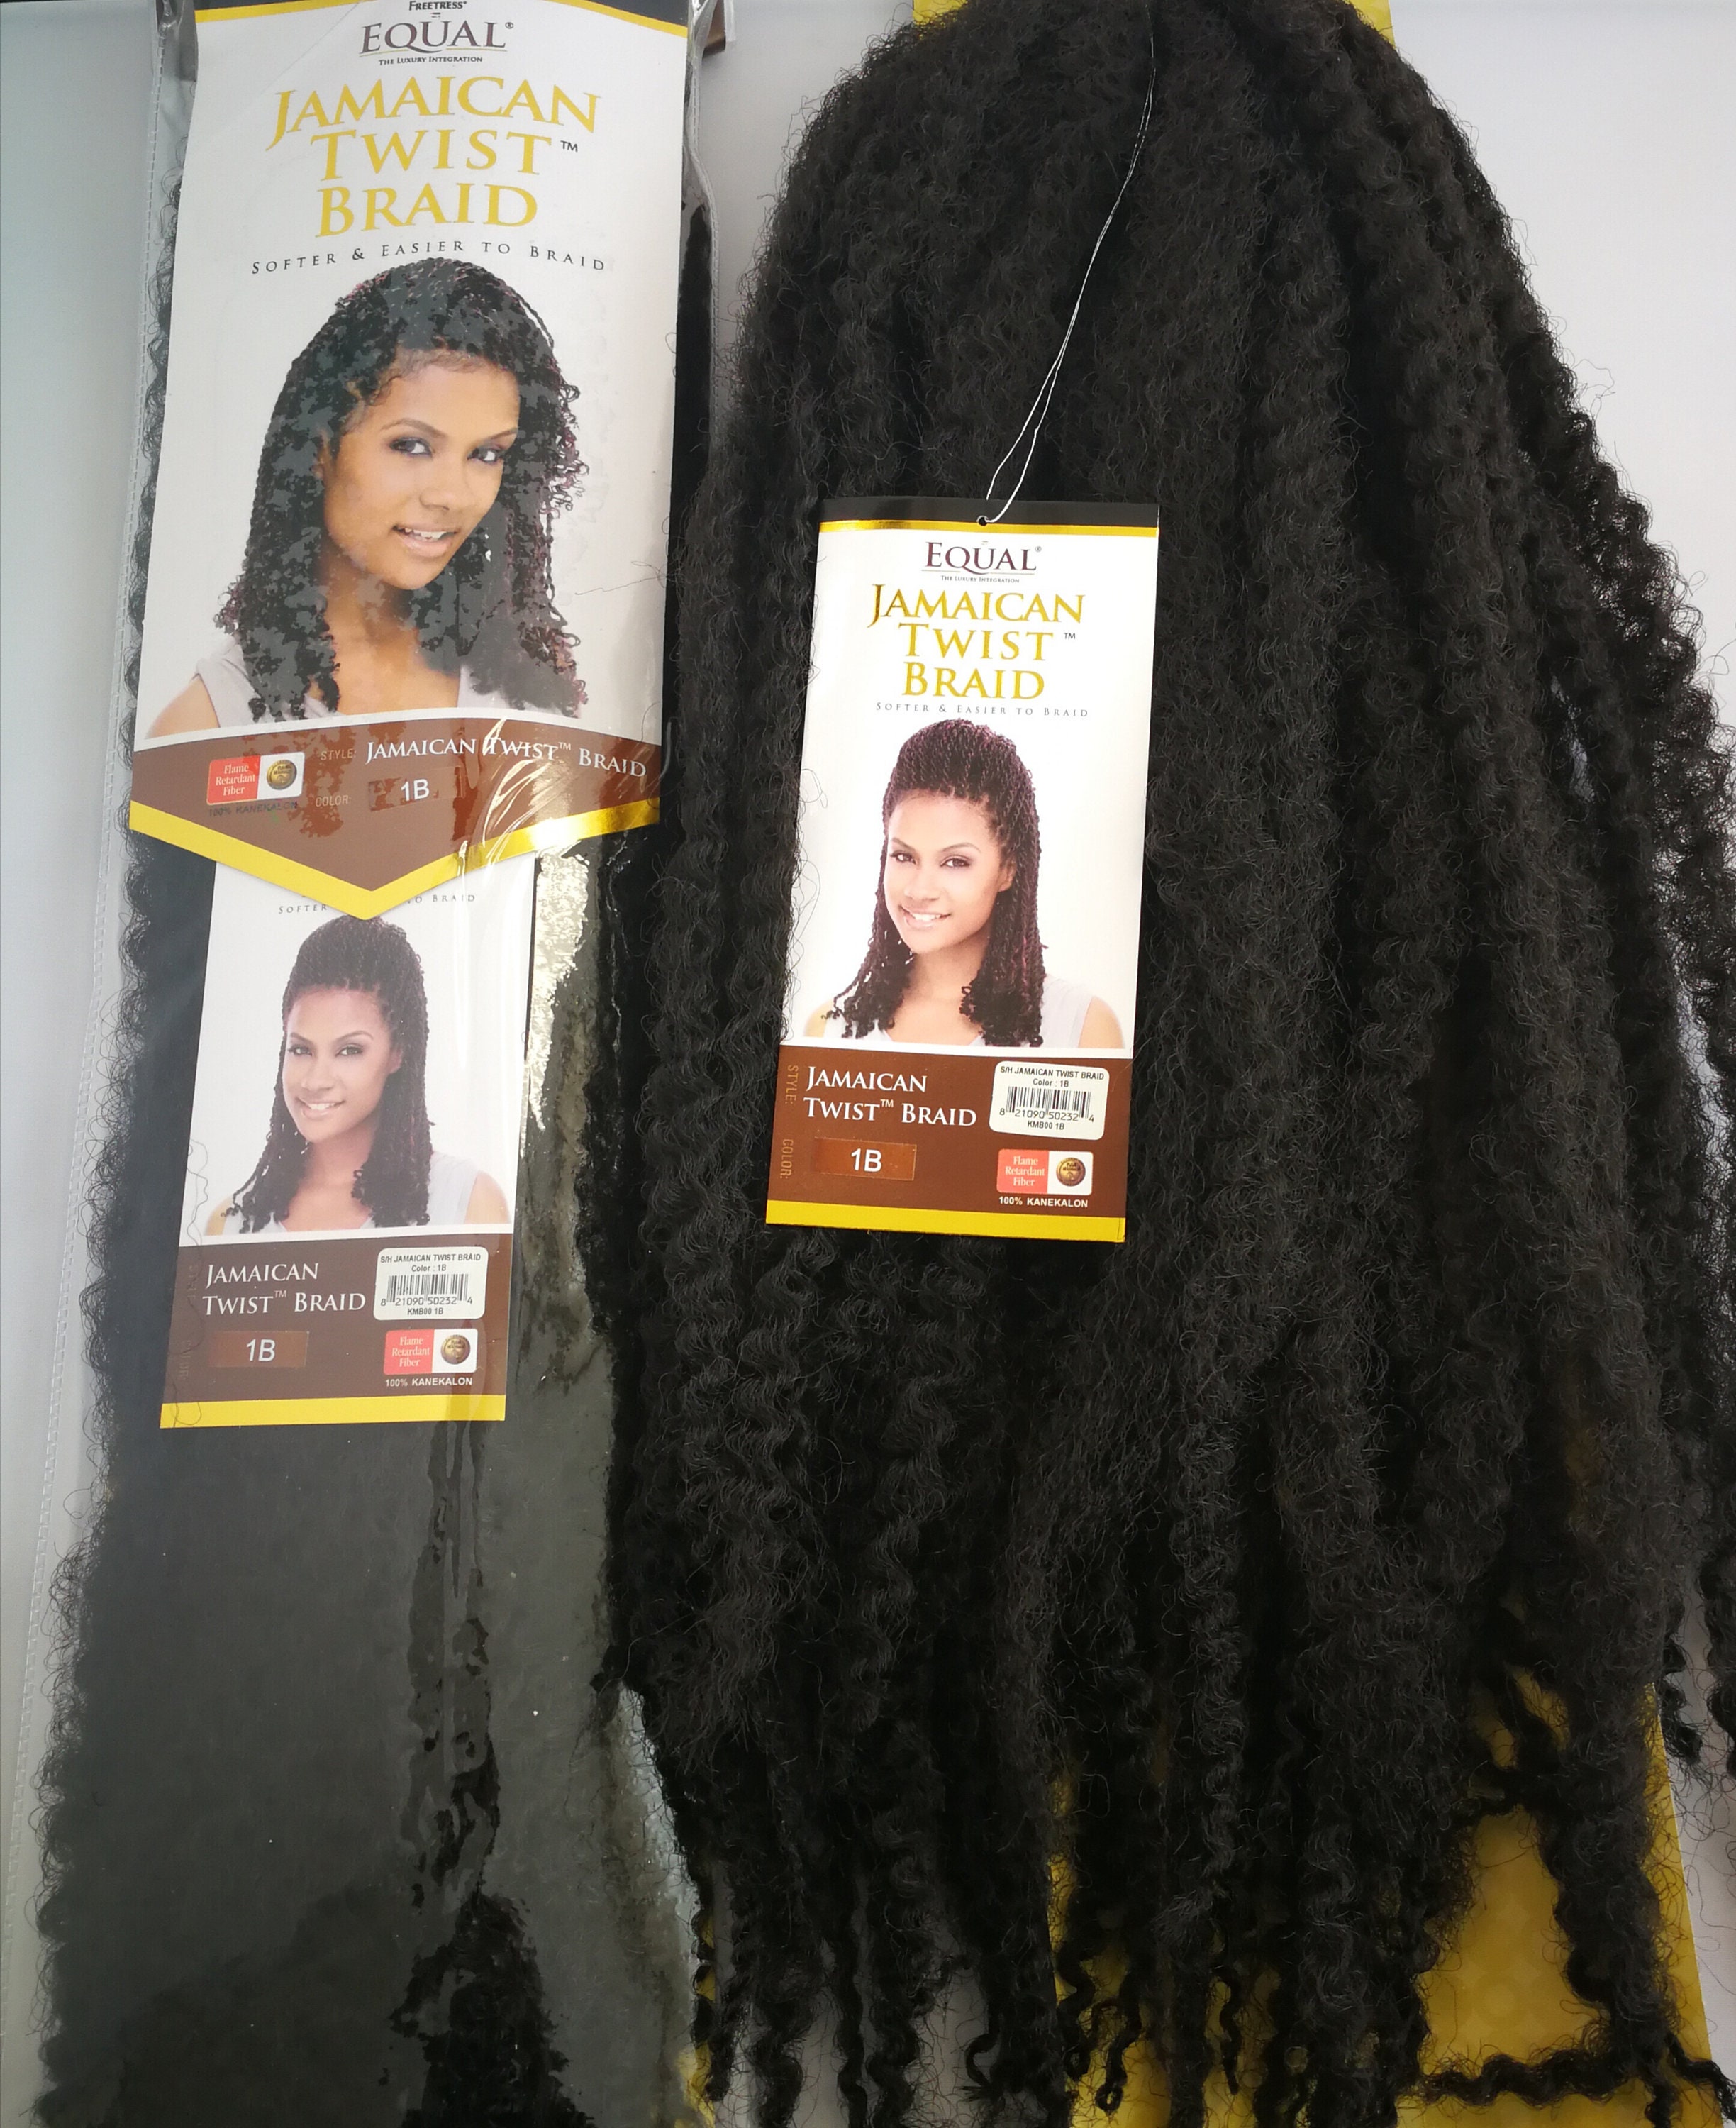 Ngozi hair braiding and beauty supply - Hair braiding